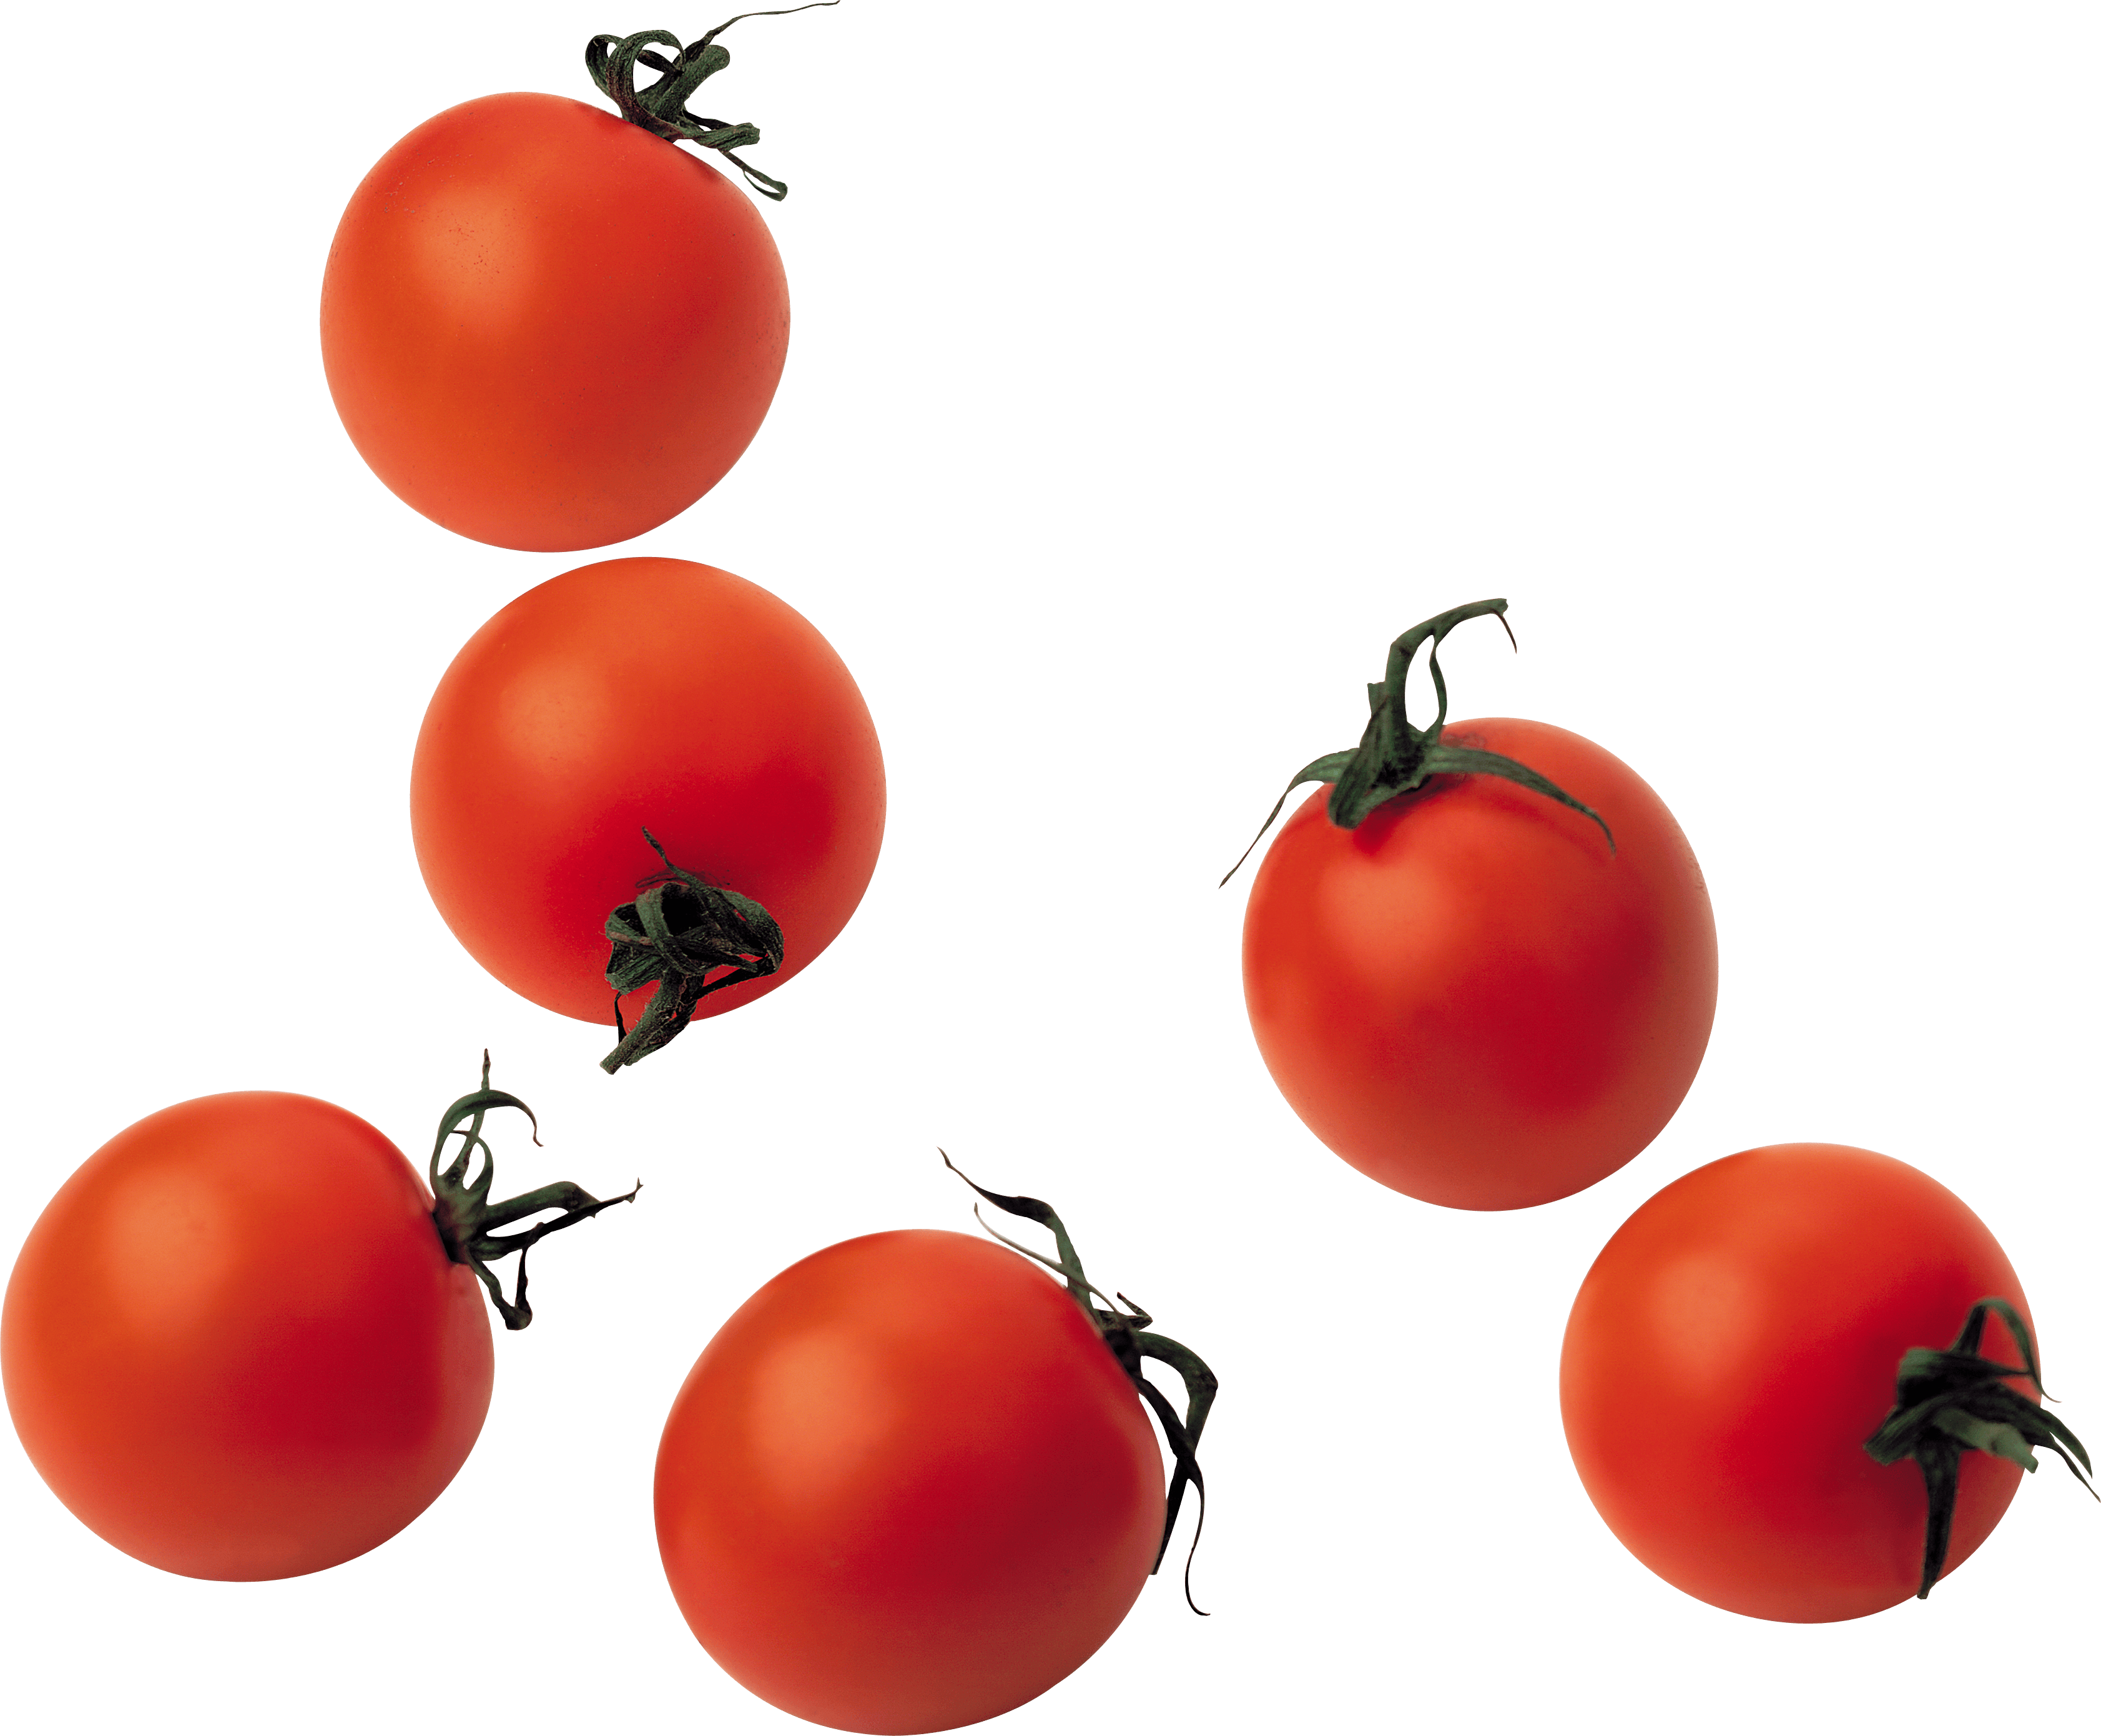 Tomato Png Image PNG Image